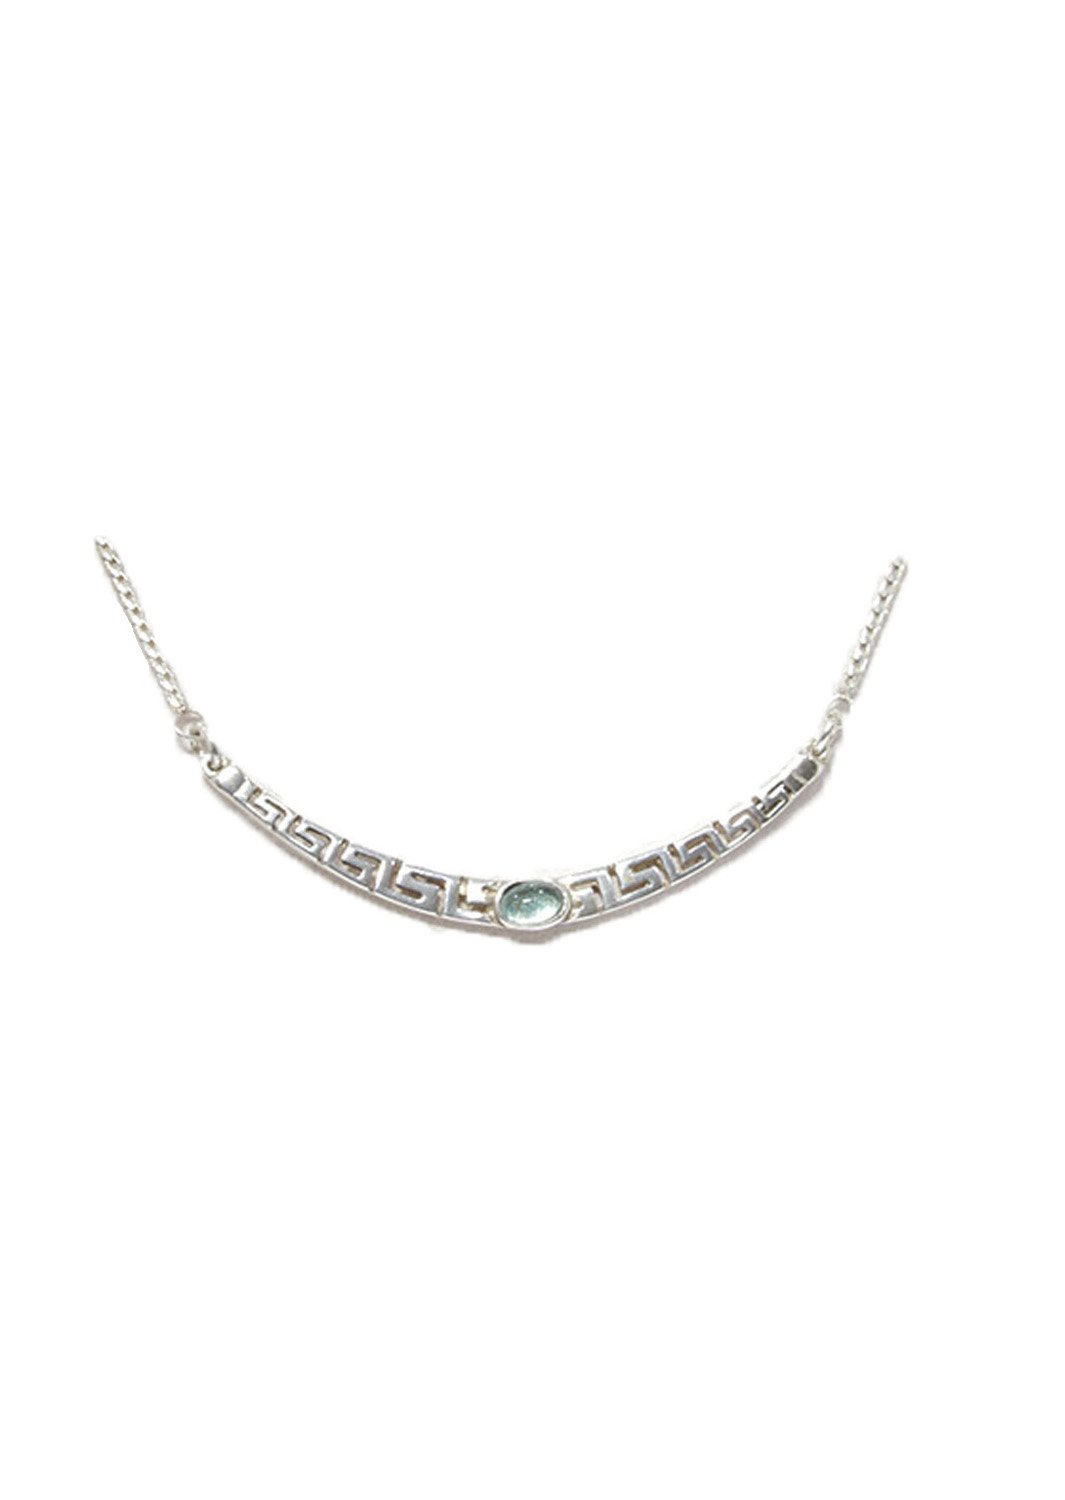 Greek key design - meander silver necklace with aquamarine